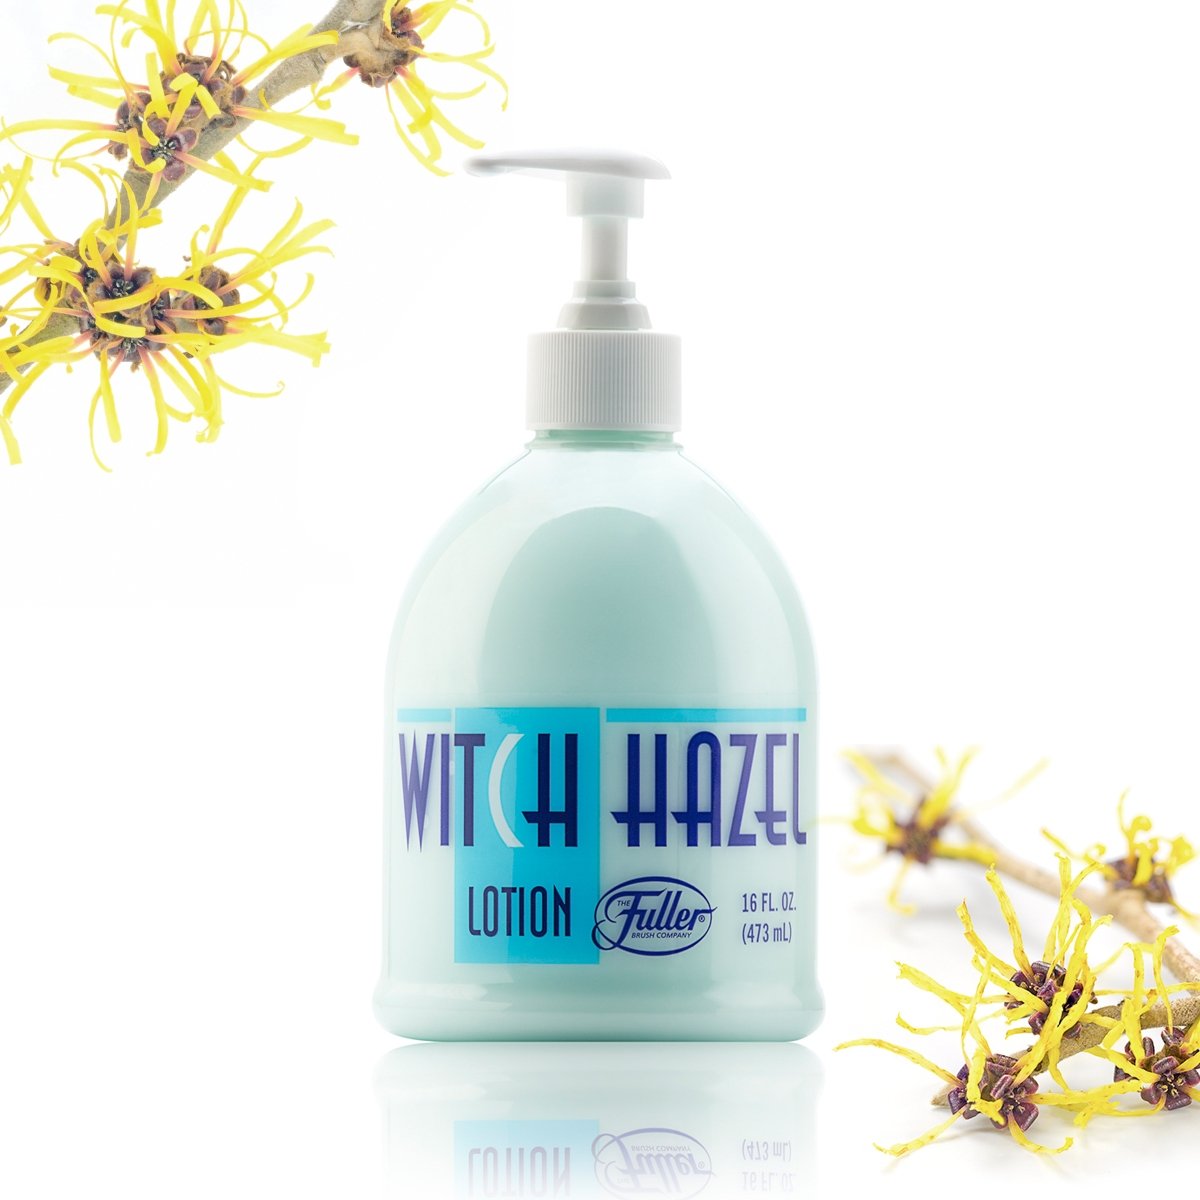 Witch Hazel Classic - Hidratante para manos secas con callosidades - Refrescante como una compañía de cepillos para después de afeitar.